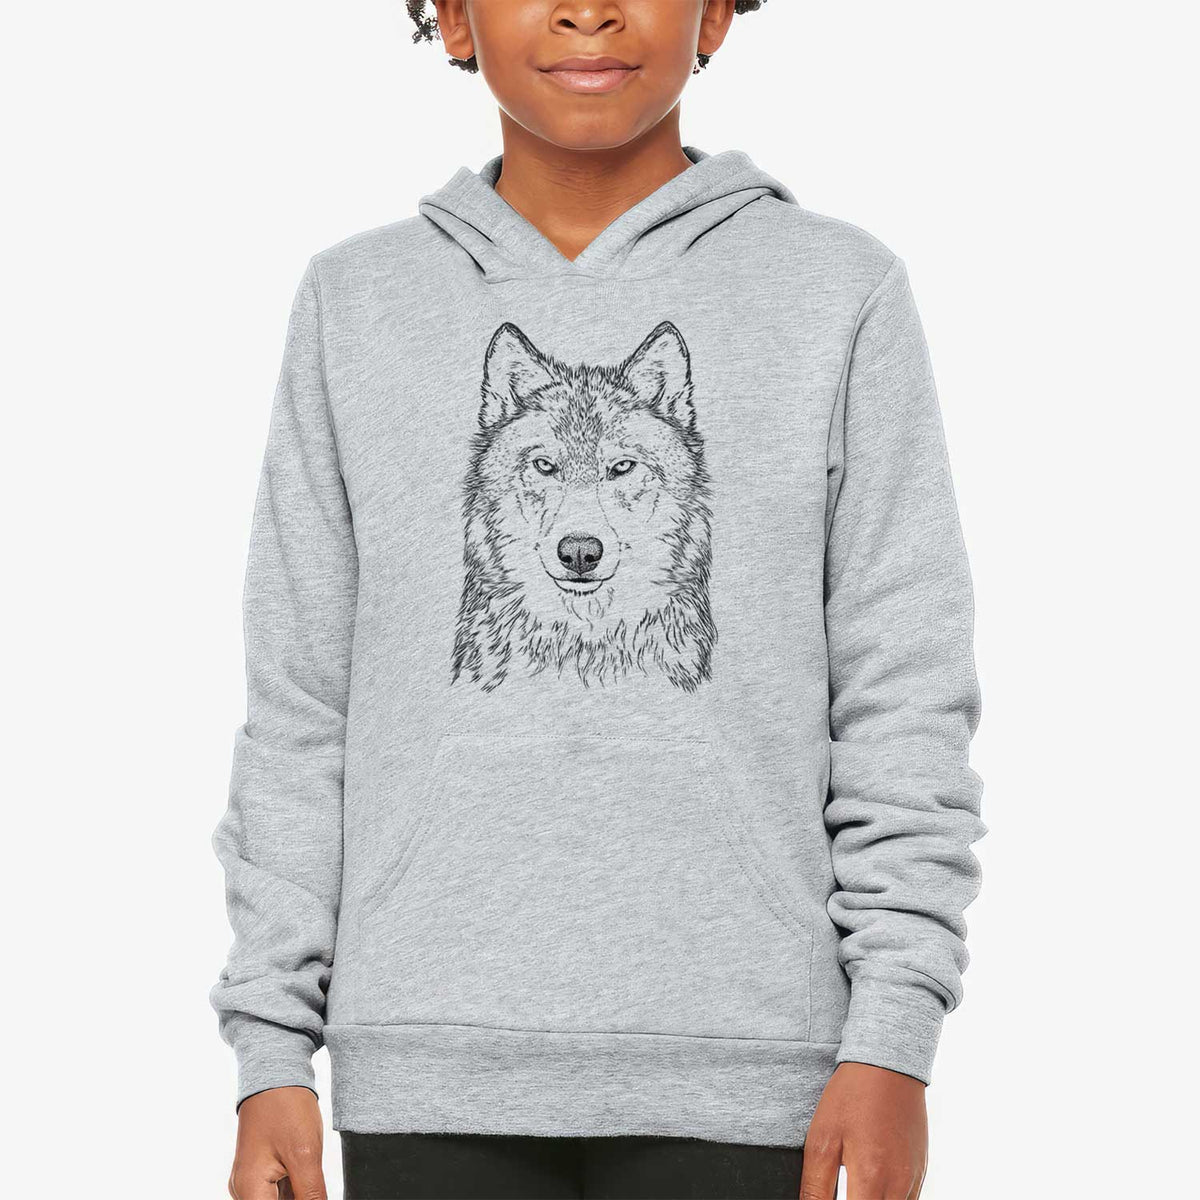 Grey Wolf - Canis lupus - Youth Hoodie Sweatshirt